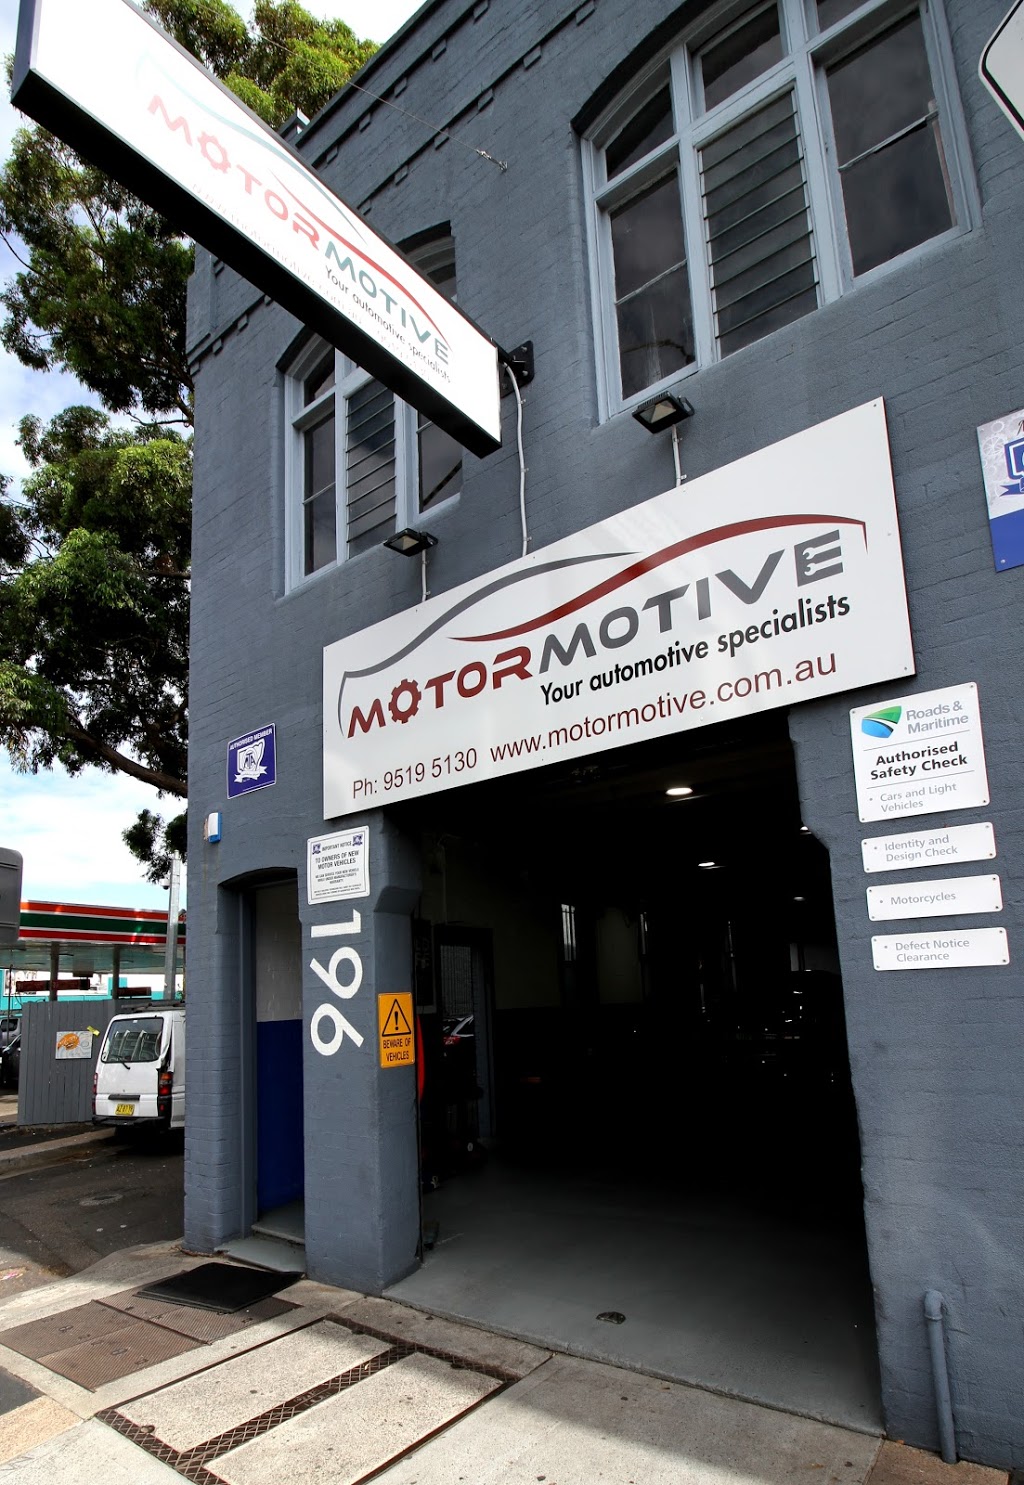 Motormotive Pty Ltd | car repair | 196 Parramatta Rd, Camperdown NSW 2050, Australia | 0295195130 OR +61 2 9519 5130